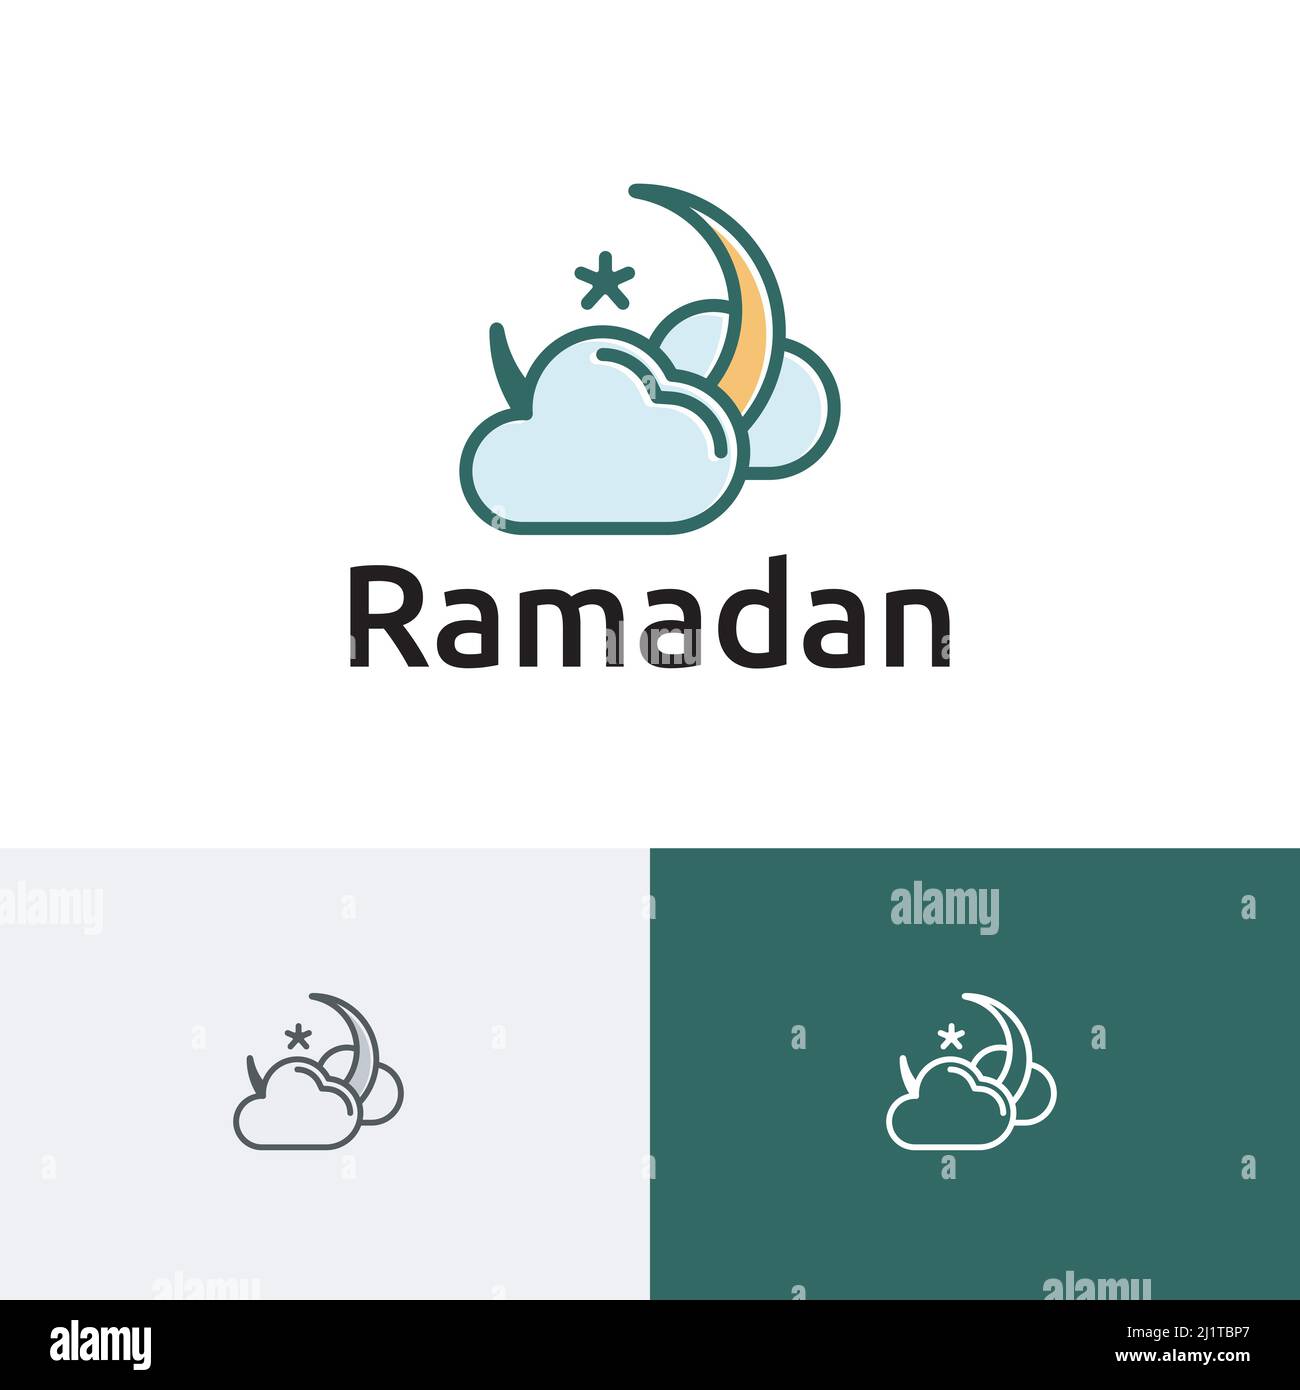 Cloud Sky Crescent Star Ramadan islamique Event logo de la communauté musulmane Illustration de Vecteur